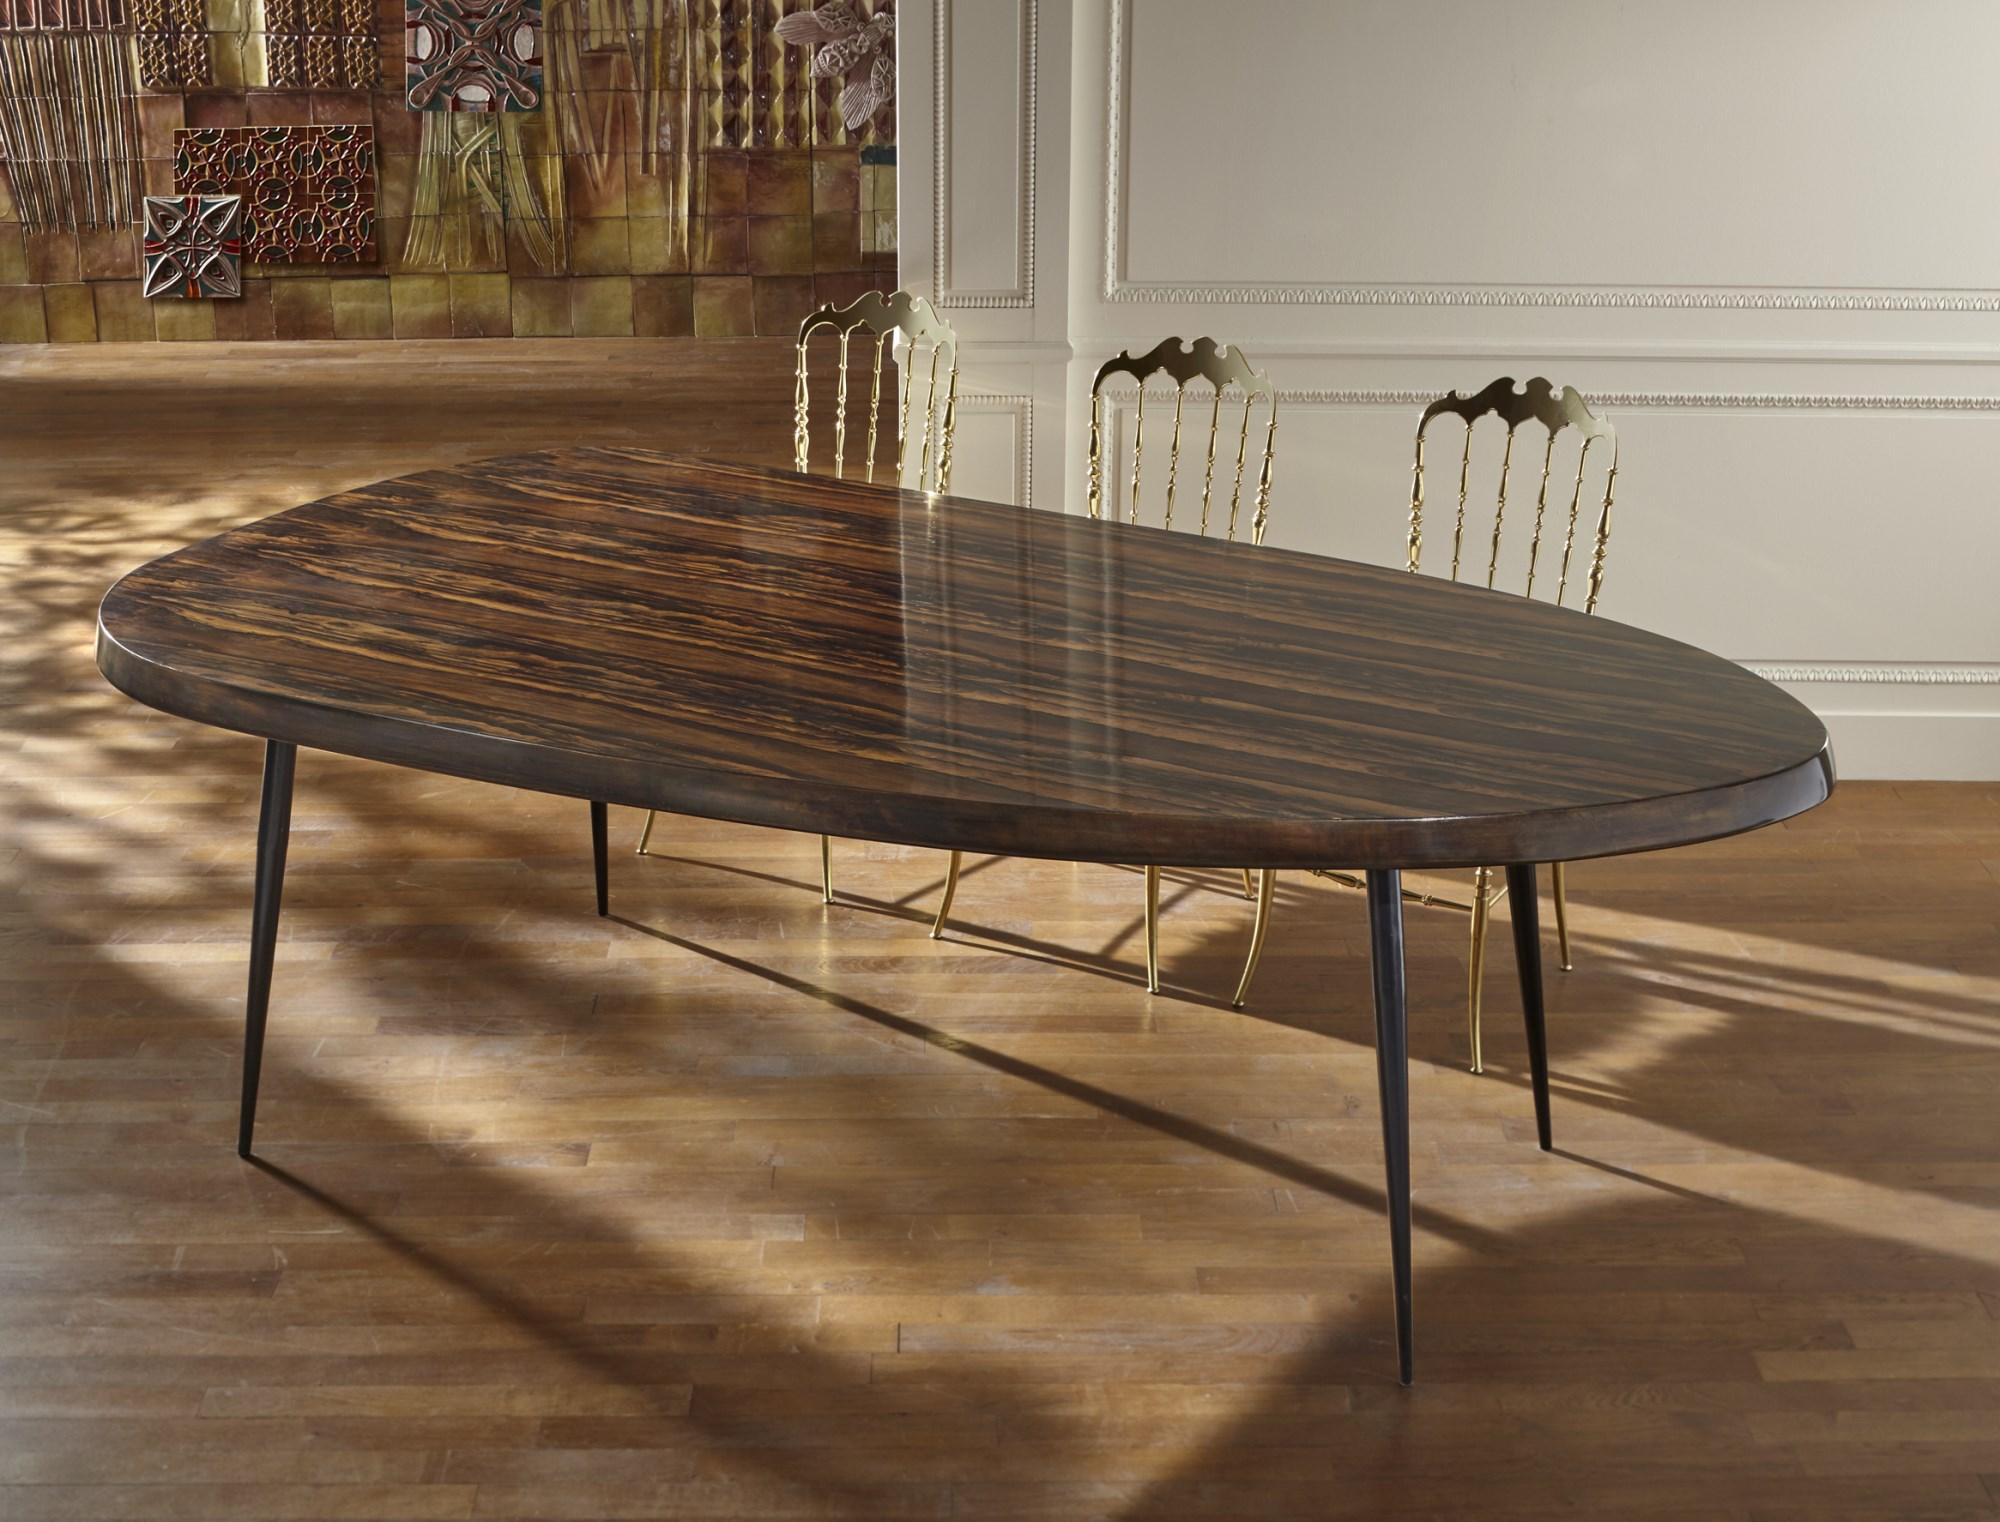 Dining table in ziricote wood.
Modern creation by Studio Glustin.
France, 2019.